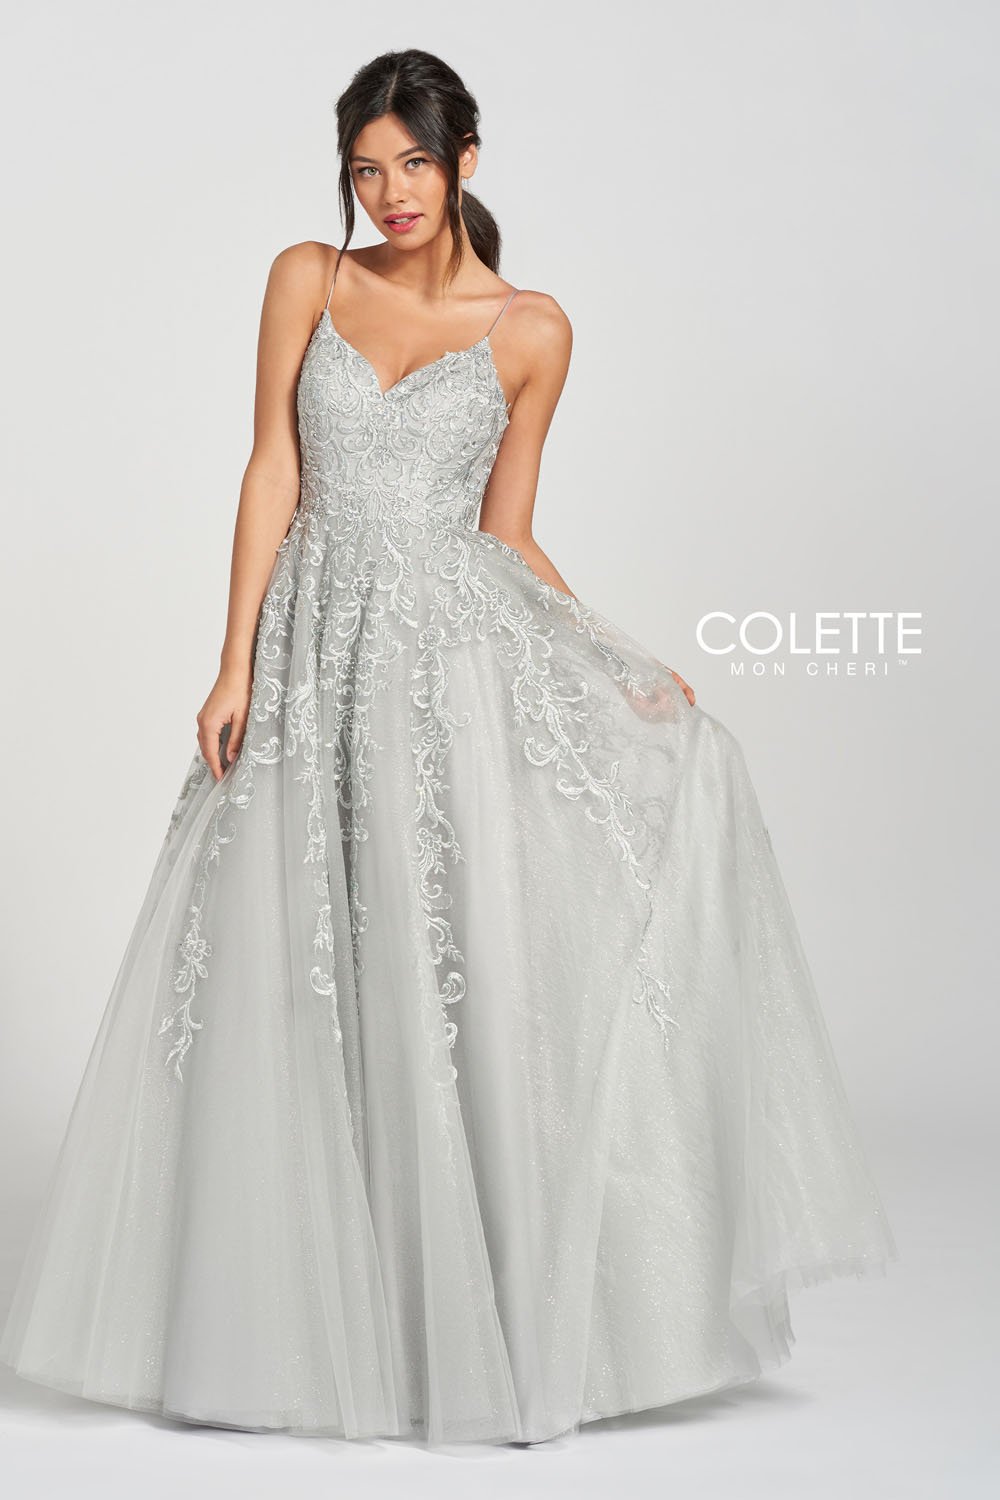 Colette CL12208 Platinum prom dresses.  Platinum prom dresses image by Colette.